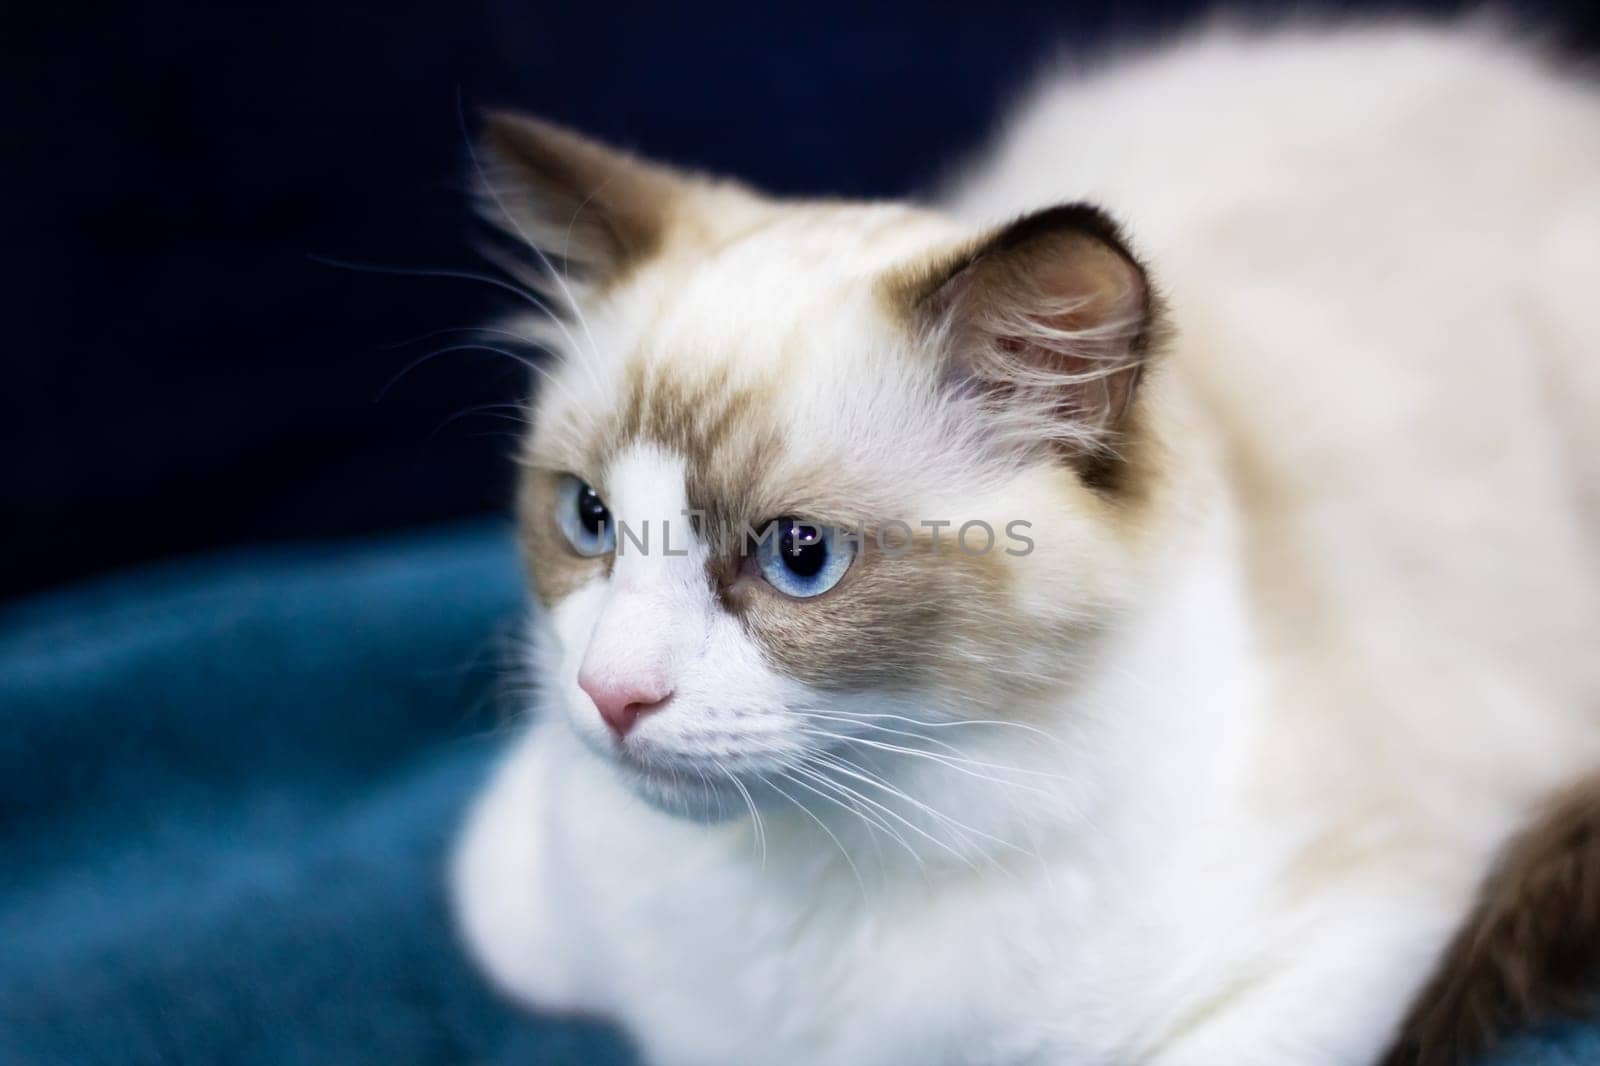 Ragdoll kitten with blue eyes close up portrait